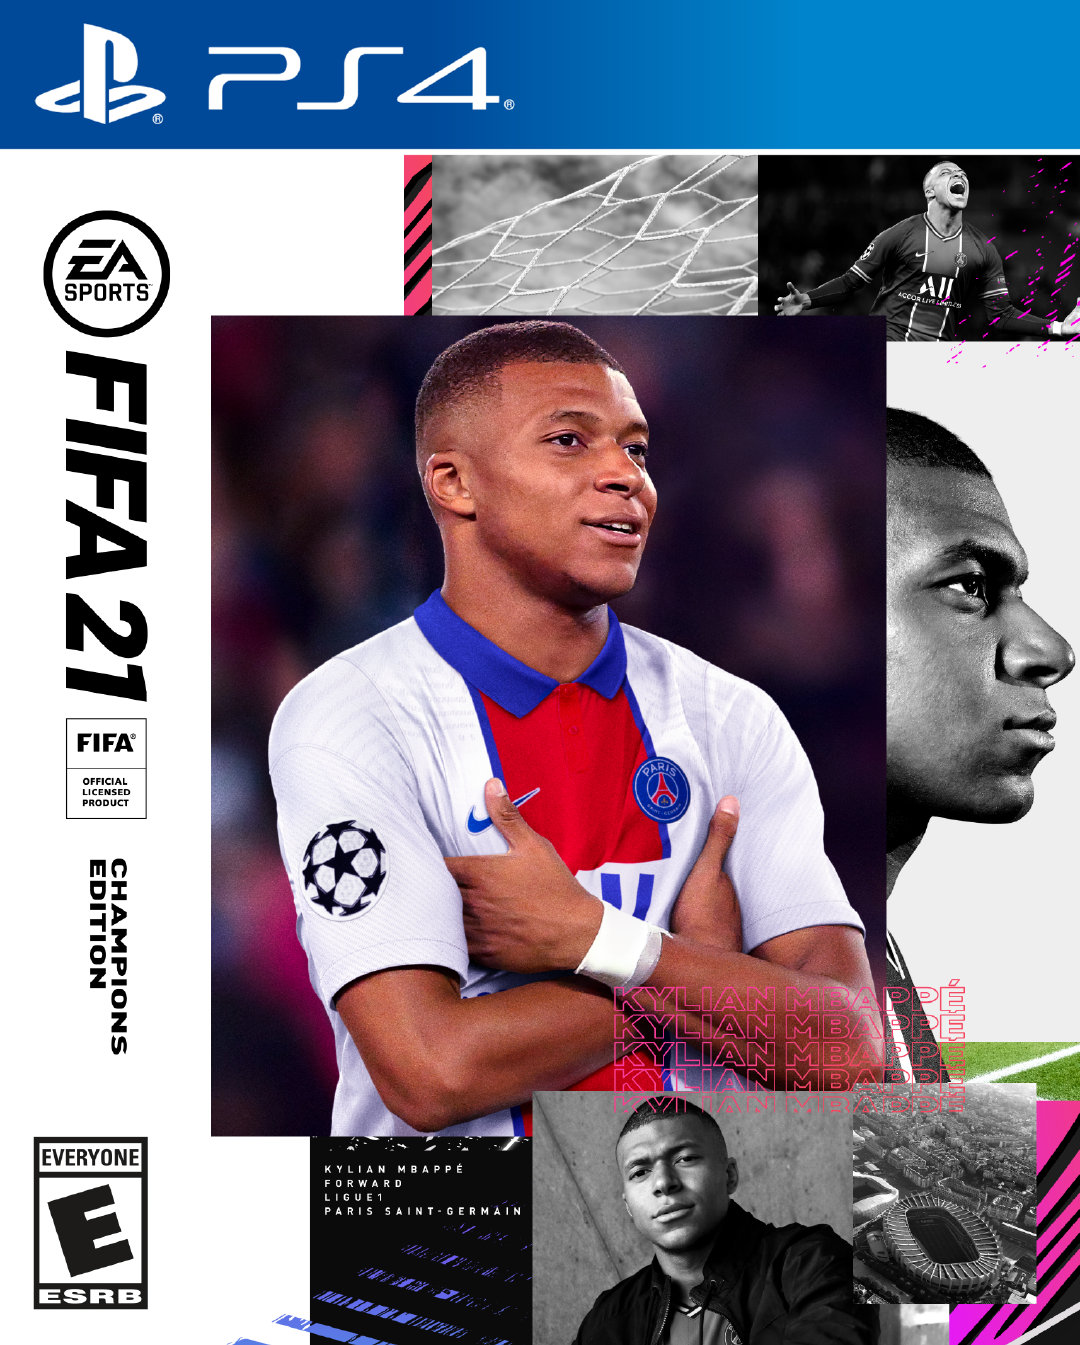 《FIFA 21》10月10日發售 姆巴佩為封面球星